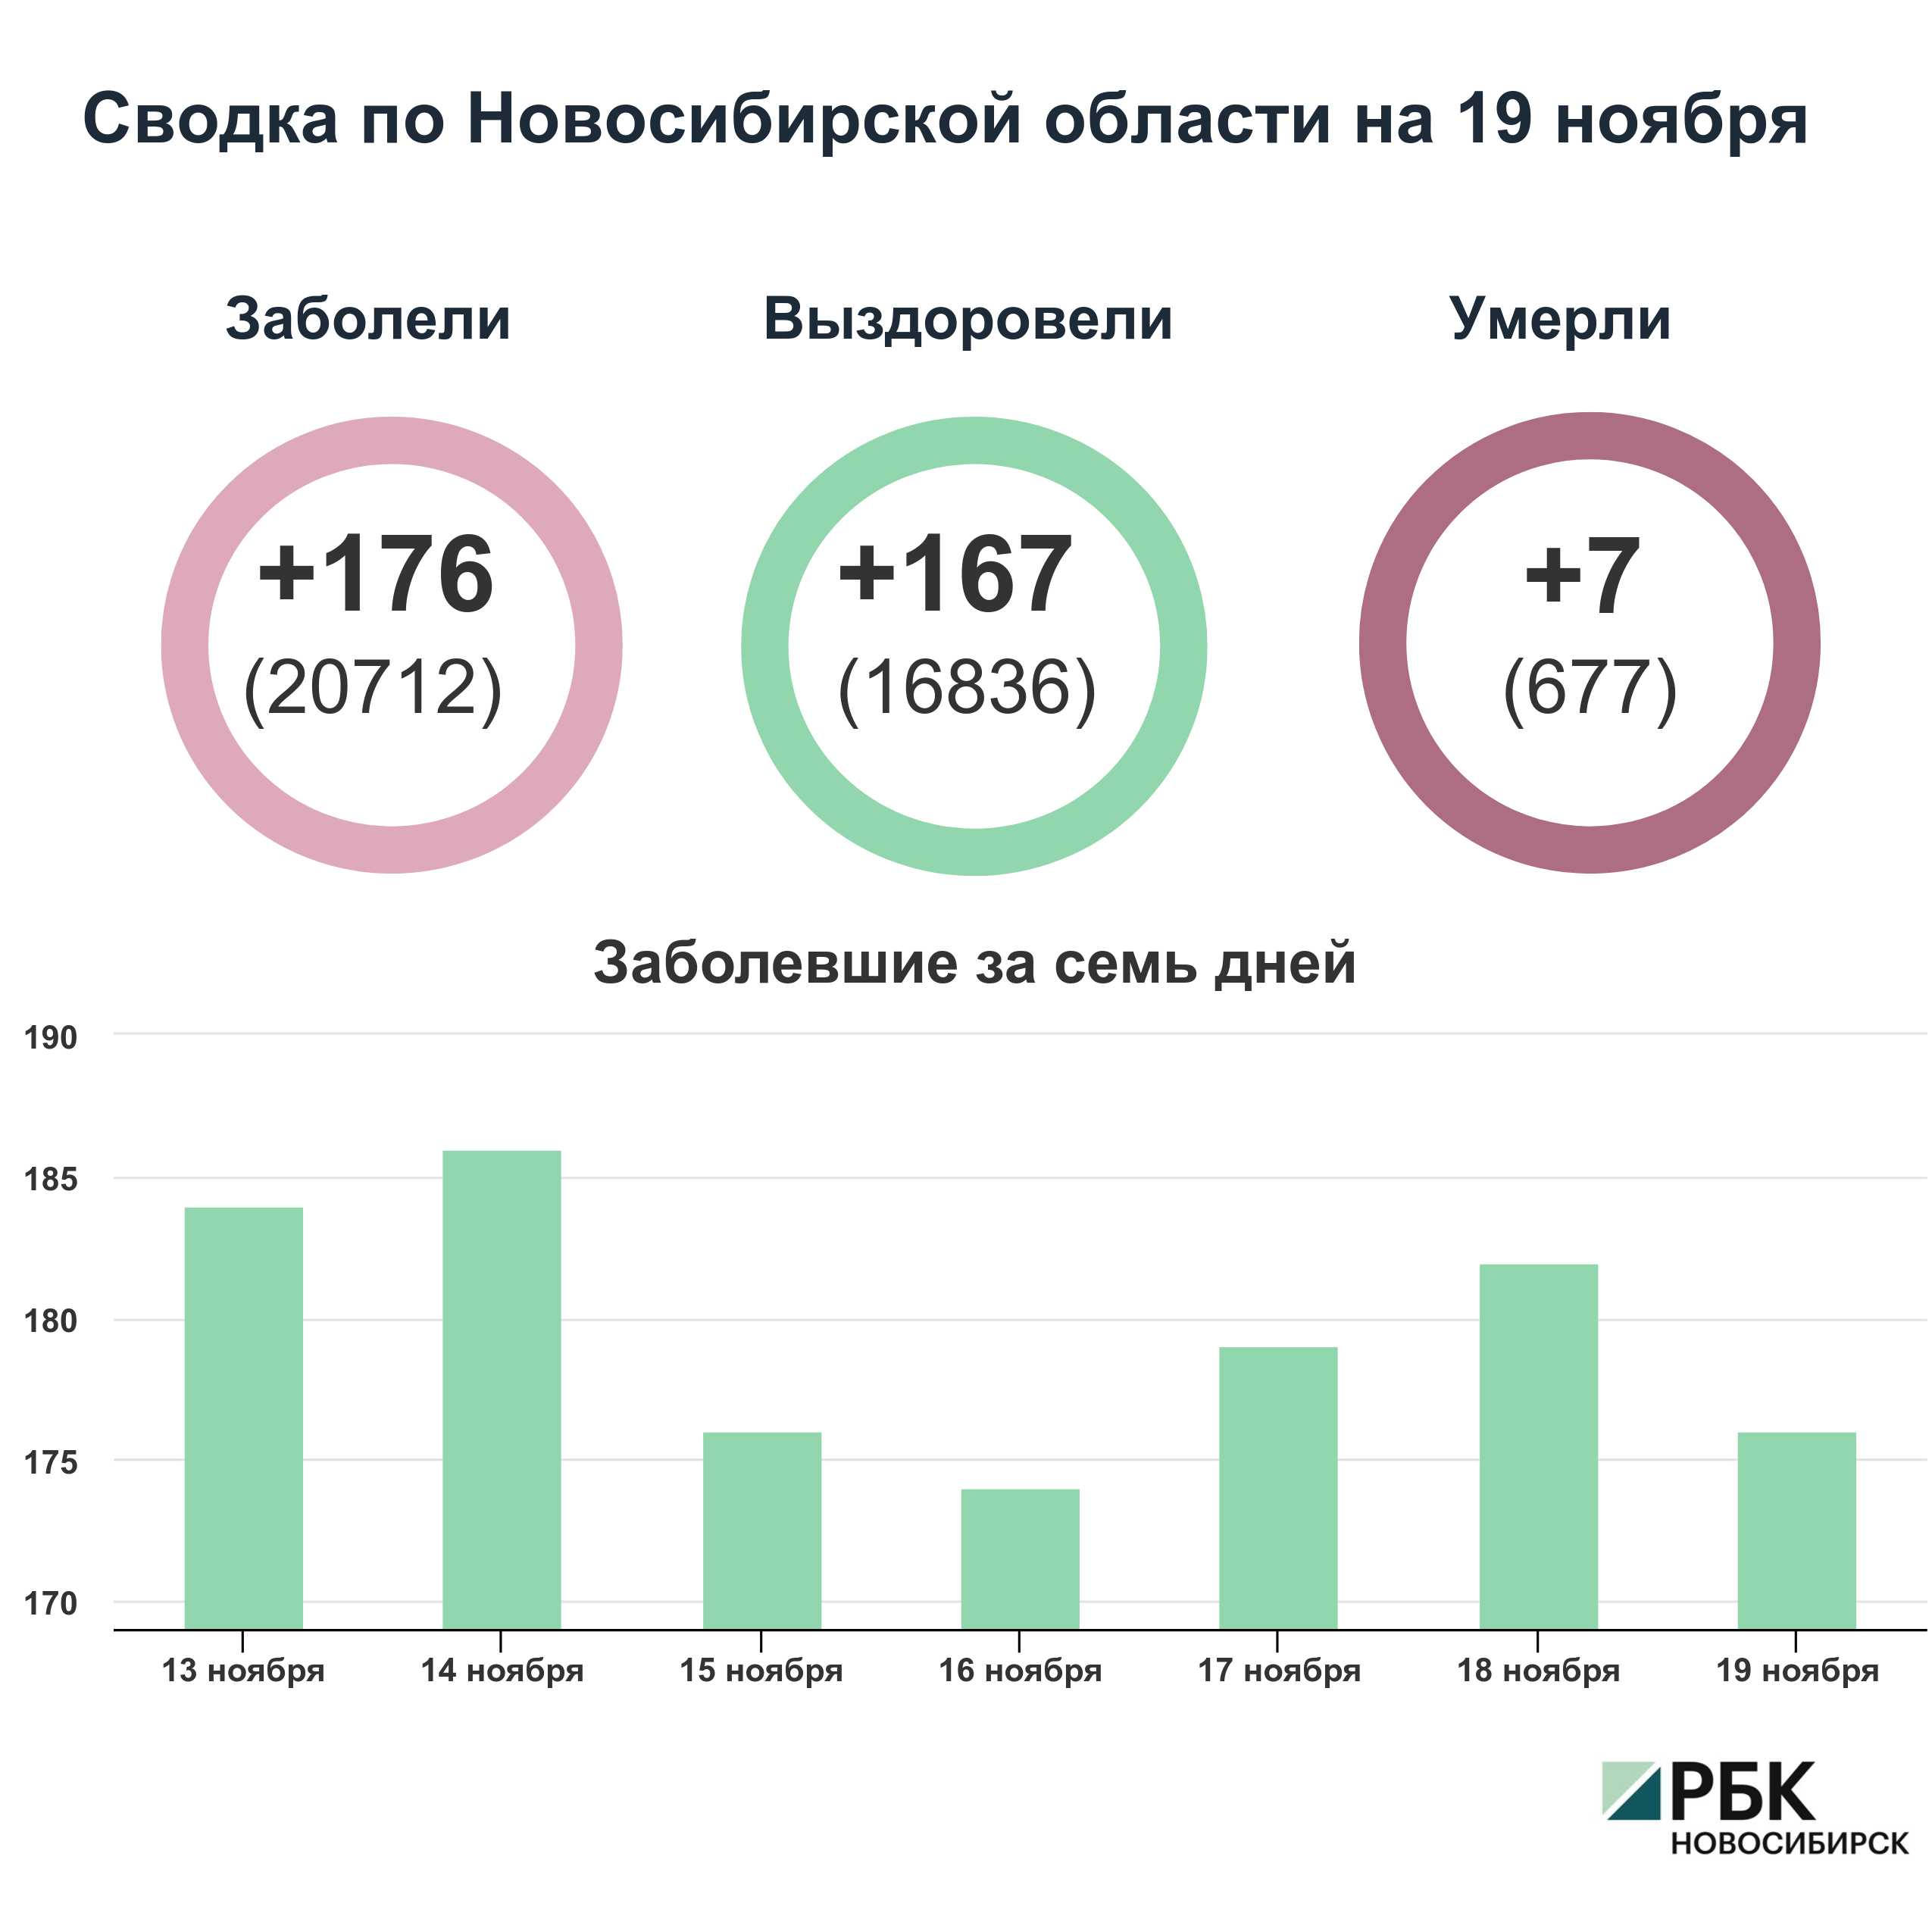 Коронавирус в Новосибирске: сводка на 19 ноября